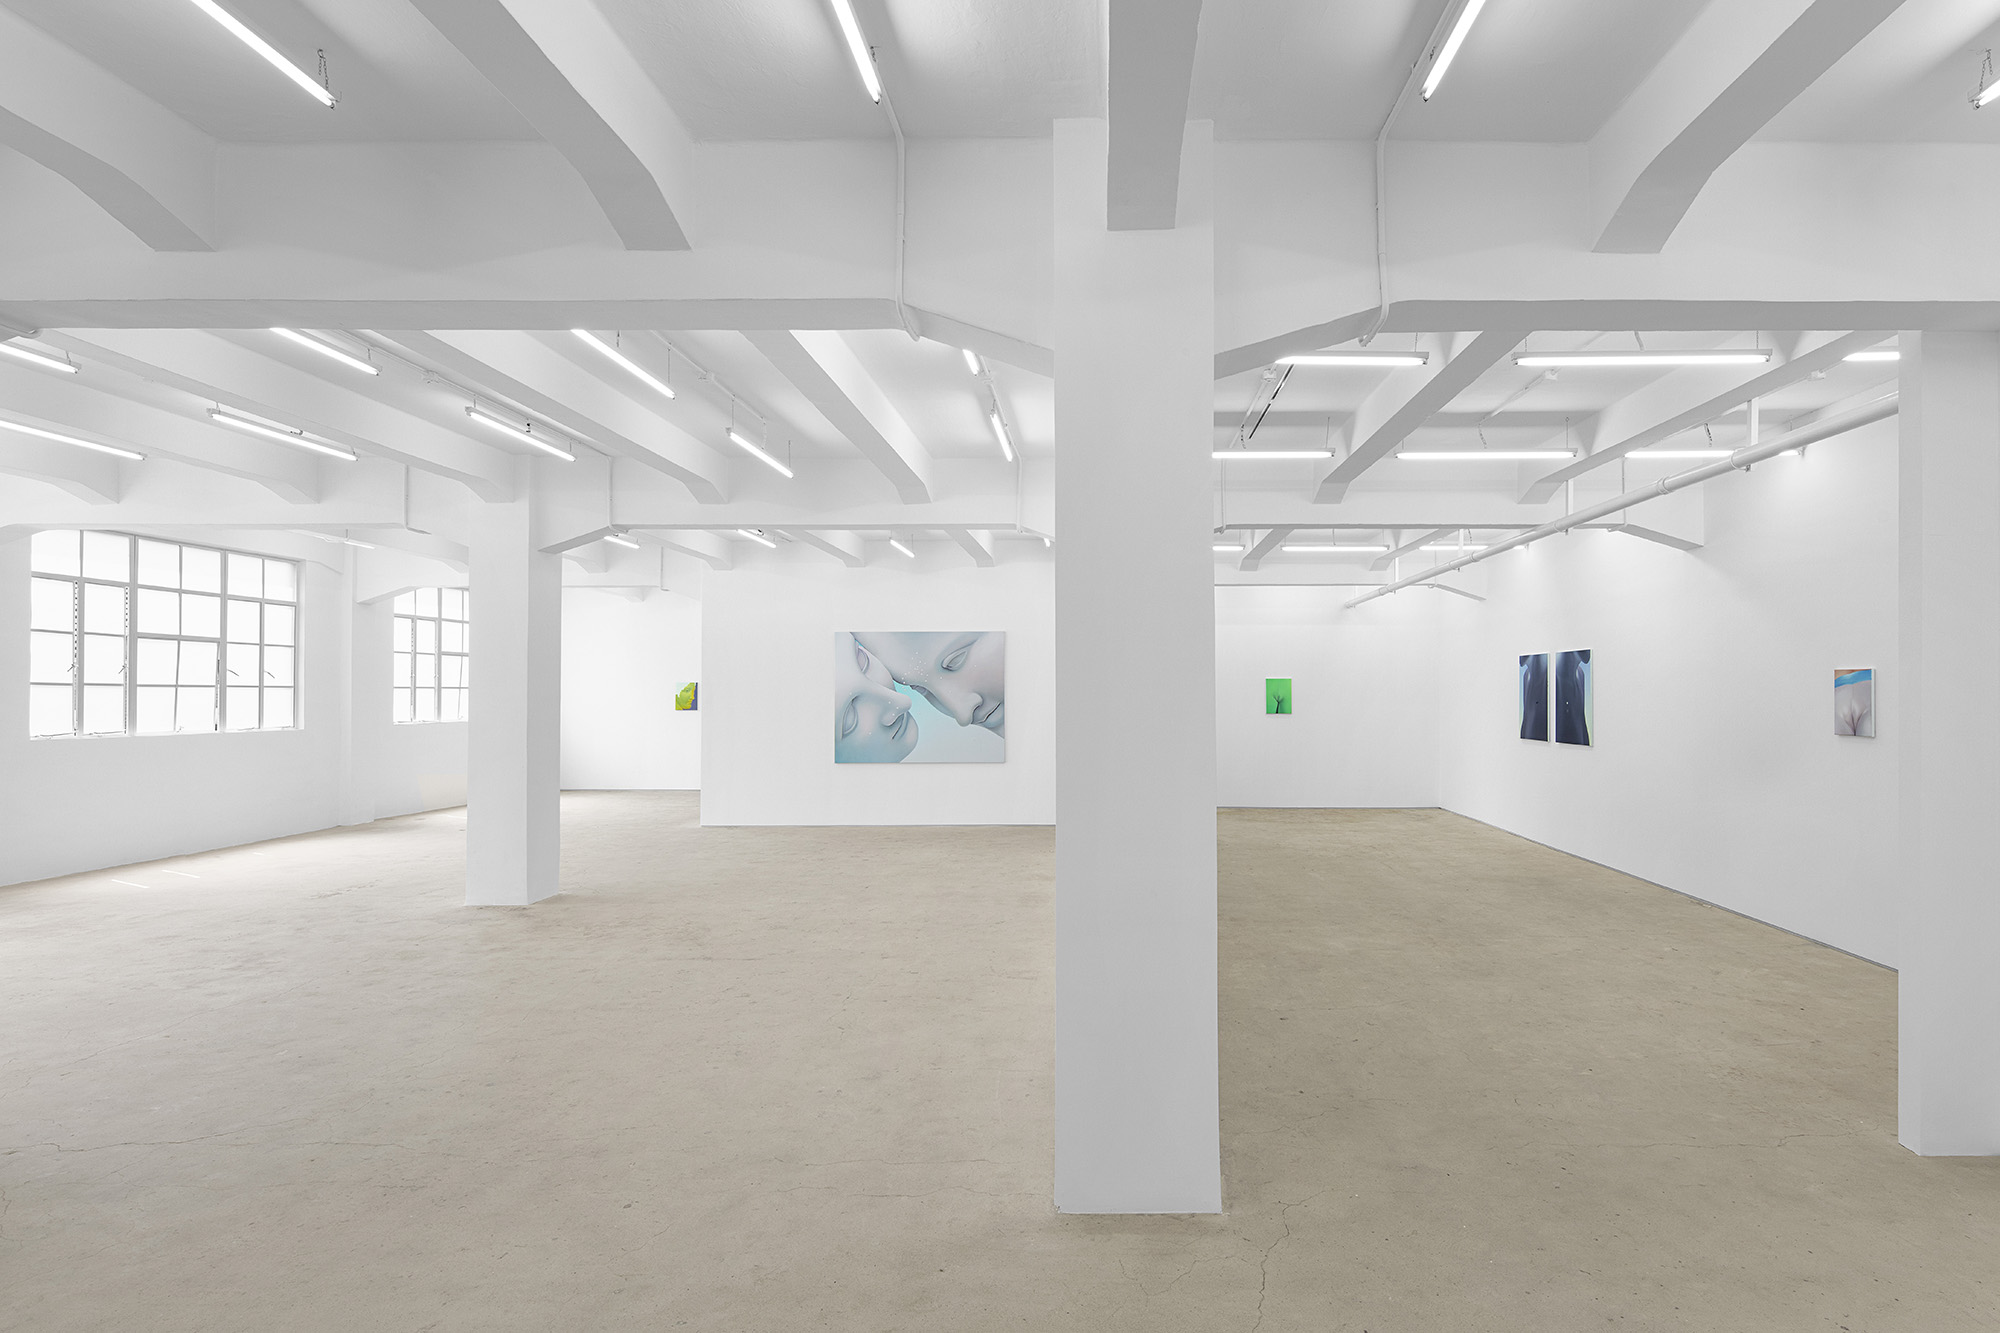 Vivian Greven, The Negatives, solo exhibition at Gallery Vacancy, installation view 23